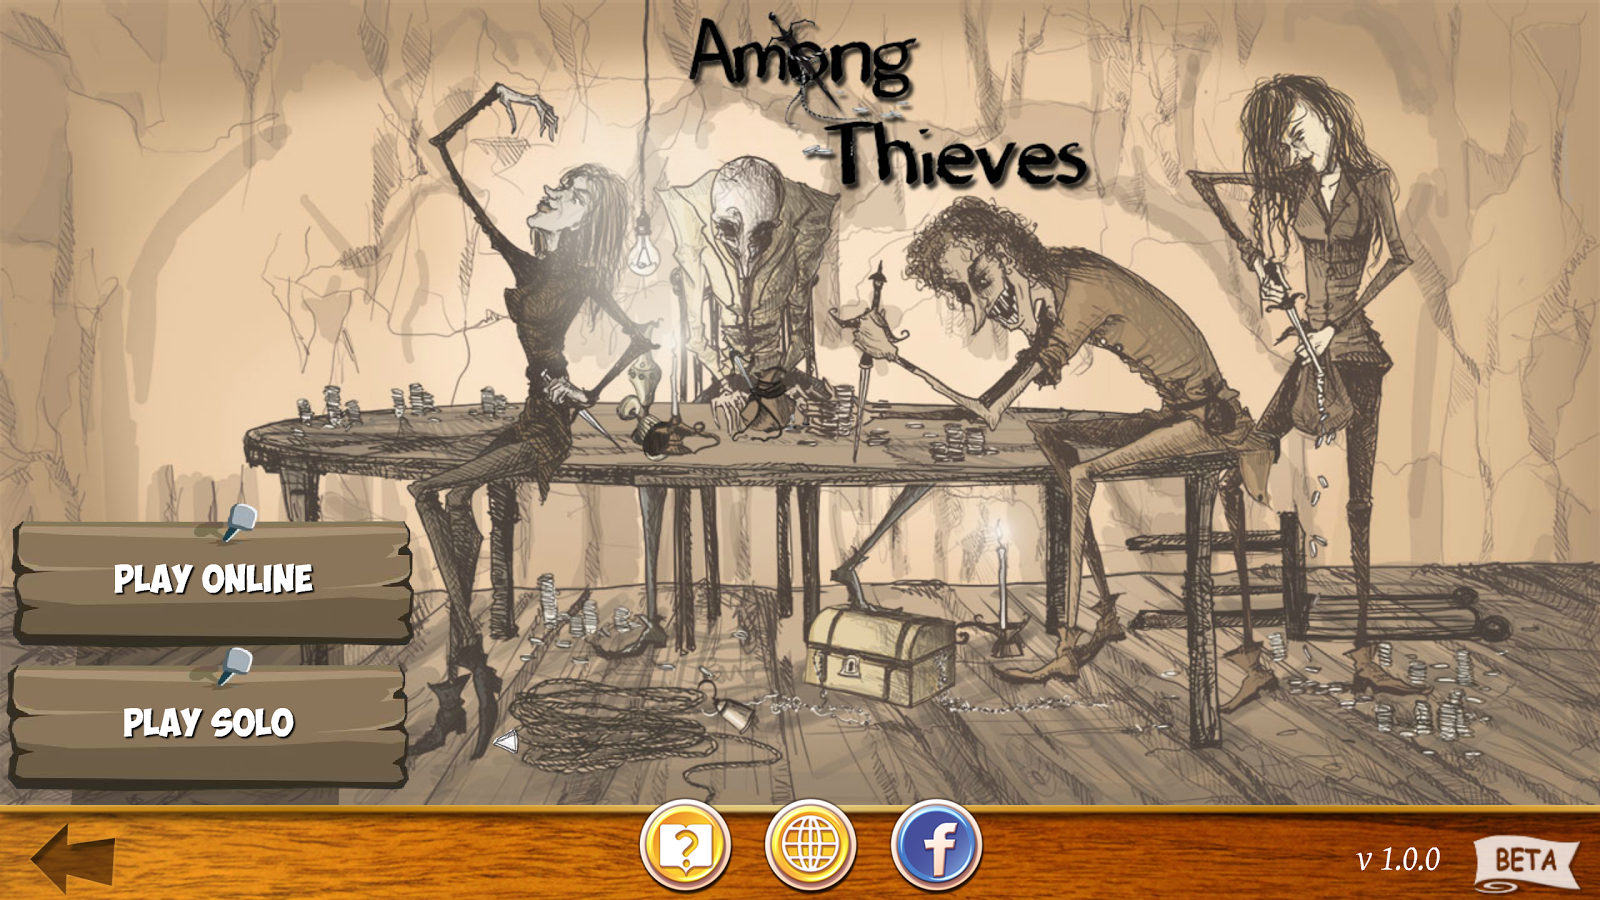    Among Thieves- screenshot  